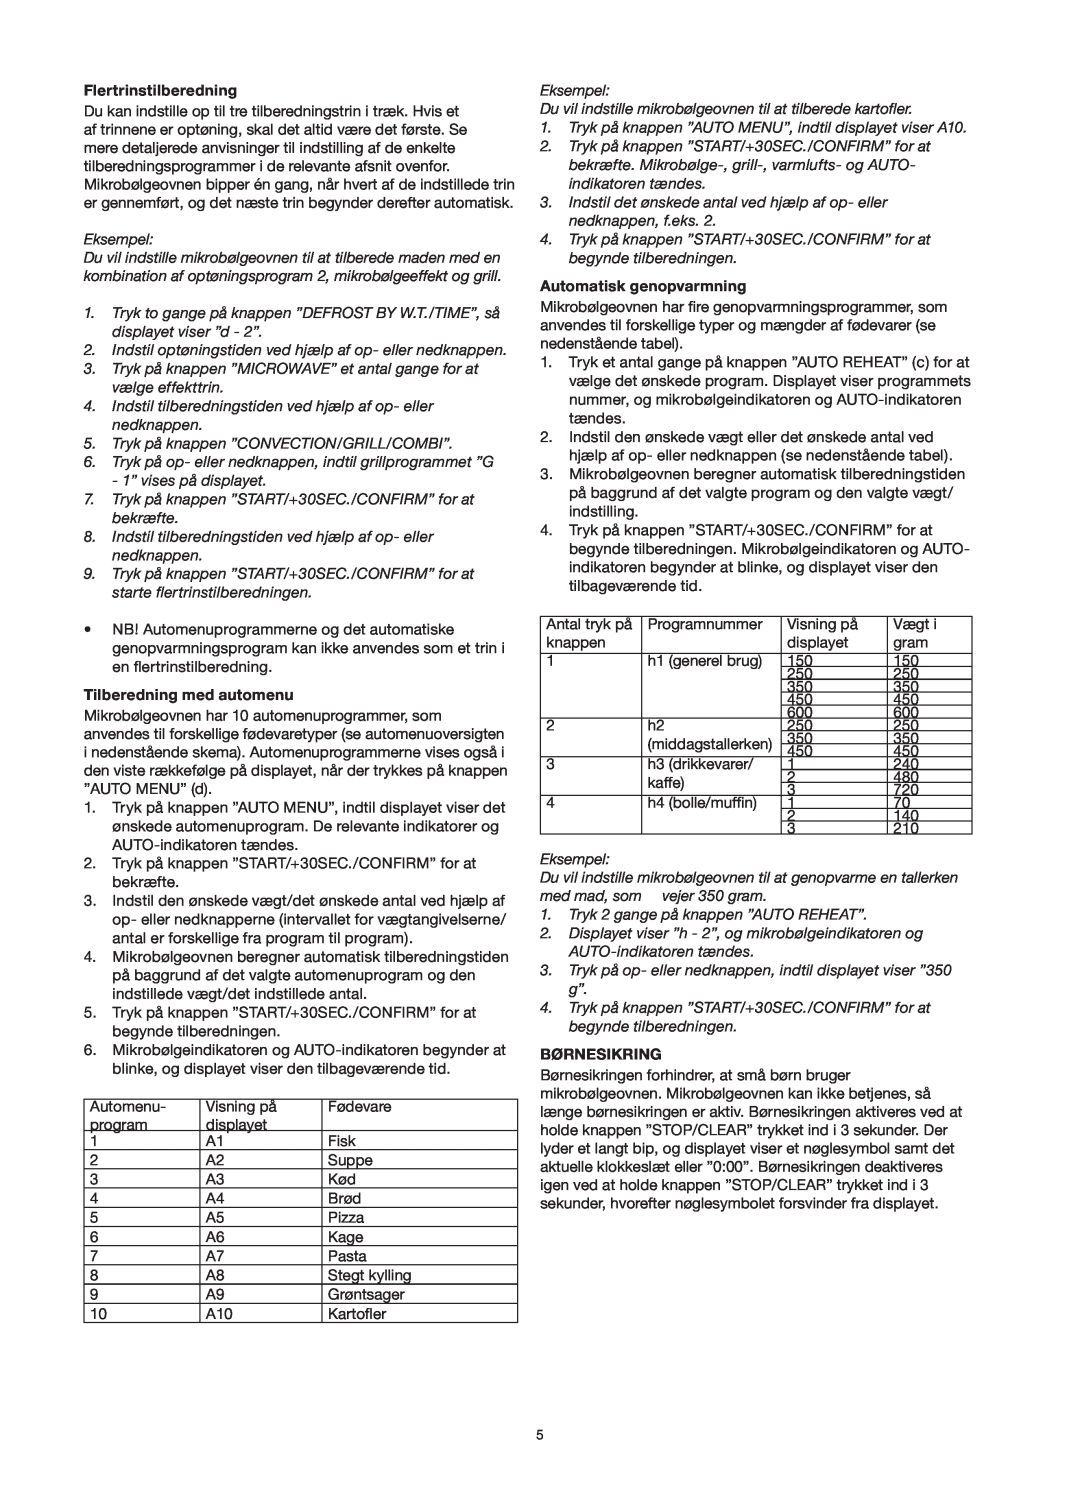 Melissa 253-013 manual Flertrinstilberedning, Tilberedning med automenu, Automatisk genopvarmning, Børnesikring 